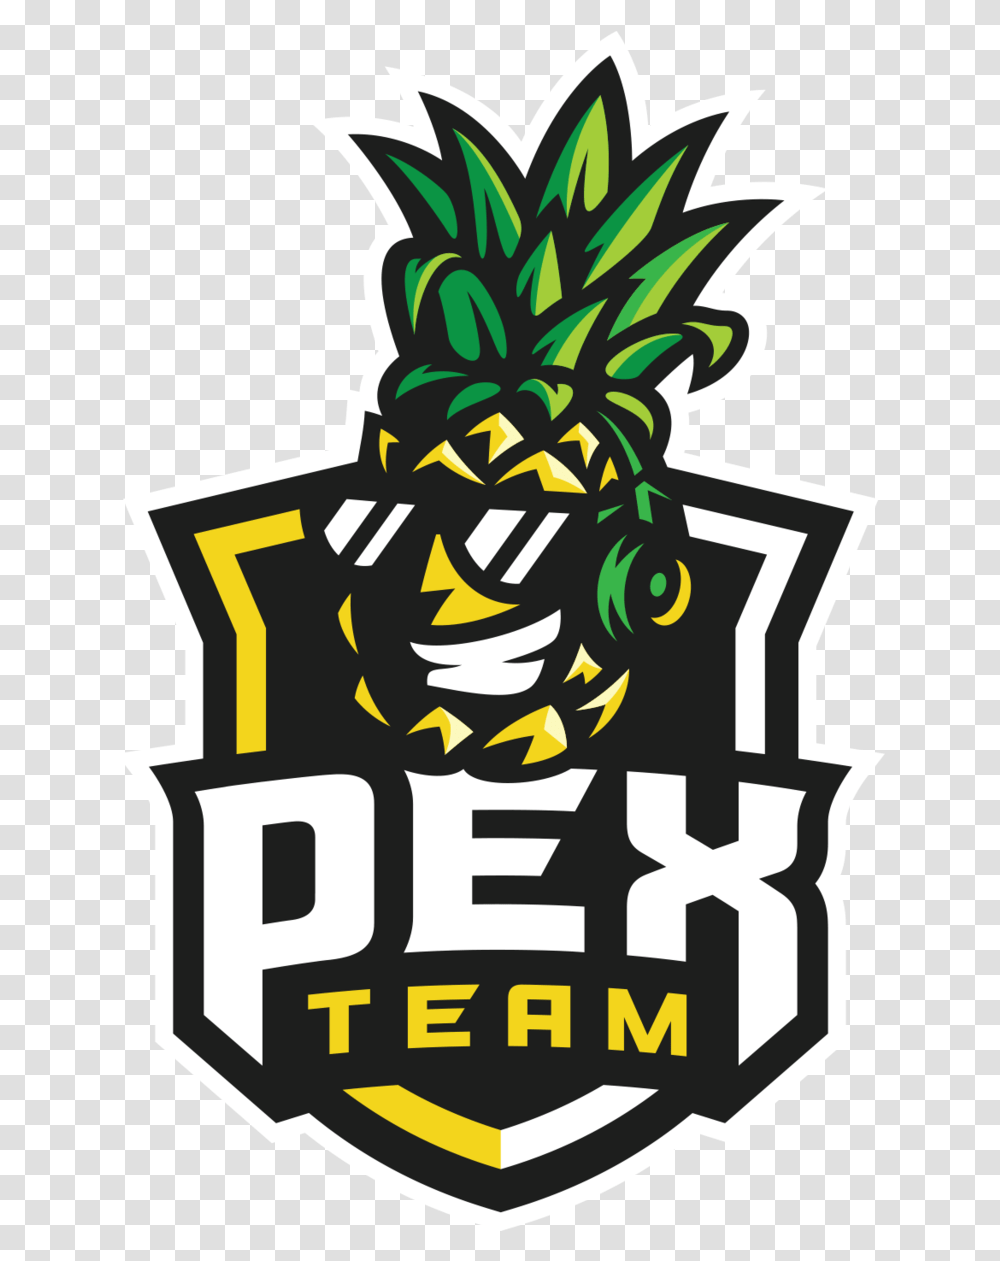 Pex Team Leaguepedia League Of Legends Esports Wiki Pex Team, Text, Graphics, Art, Alphabet Transparent Png